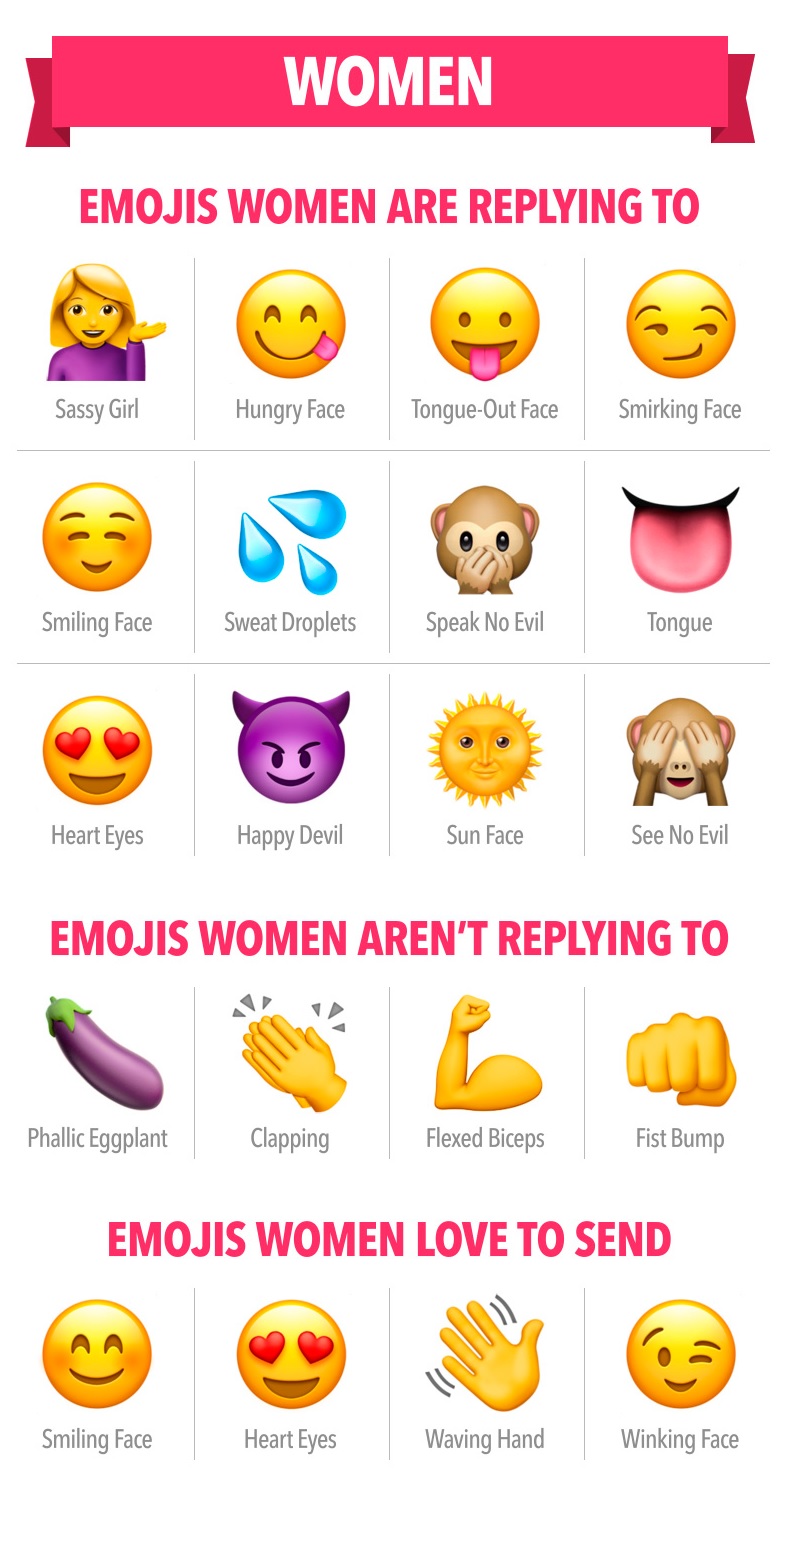 Women emoji use